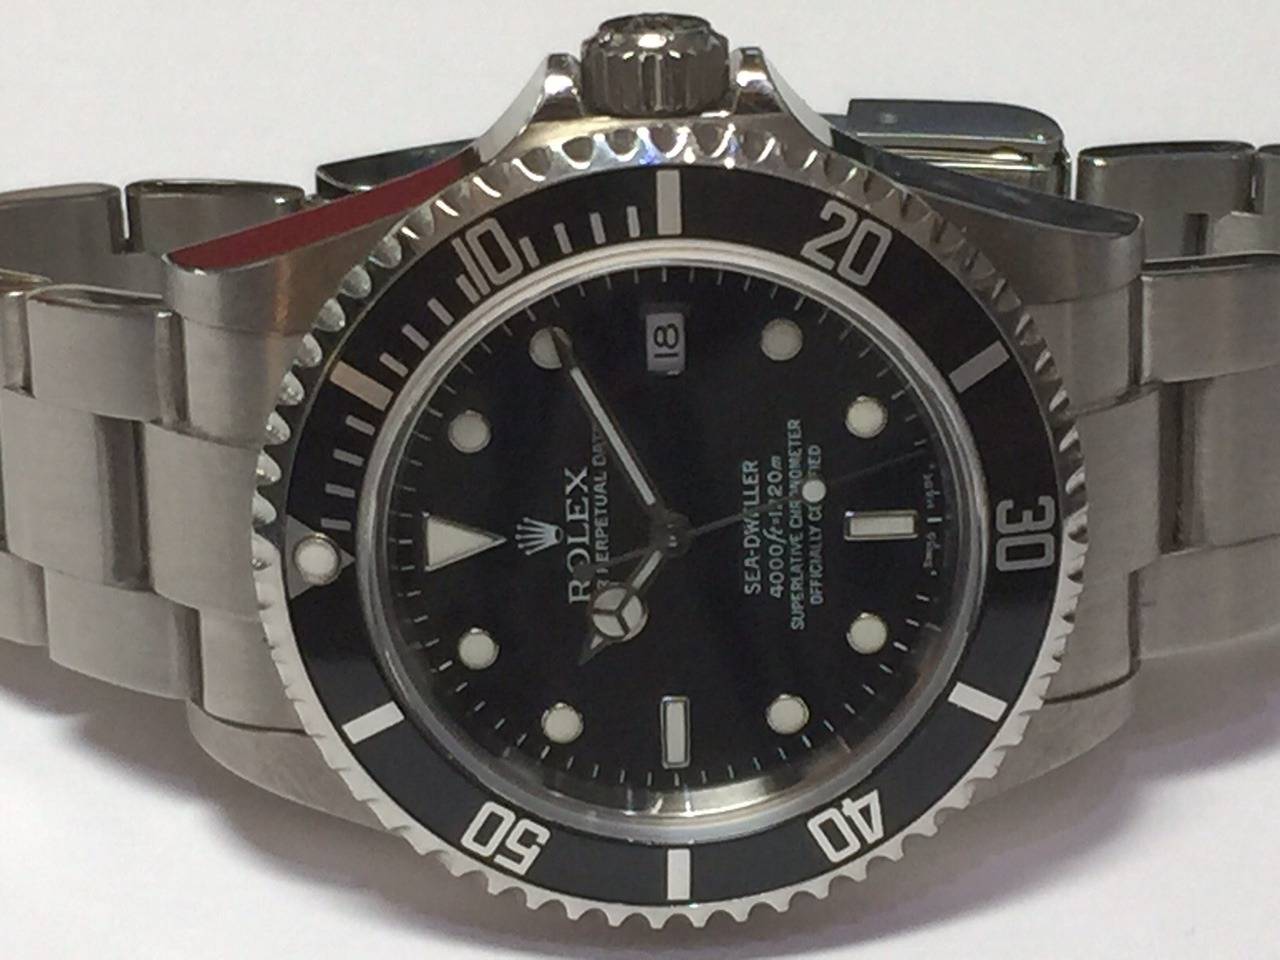 Contemporary Rolex Stainless Steel Sea-Dweller Chronometer Wristwatch Ref 16600